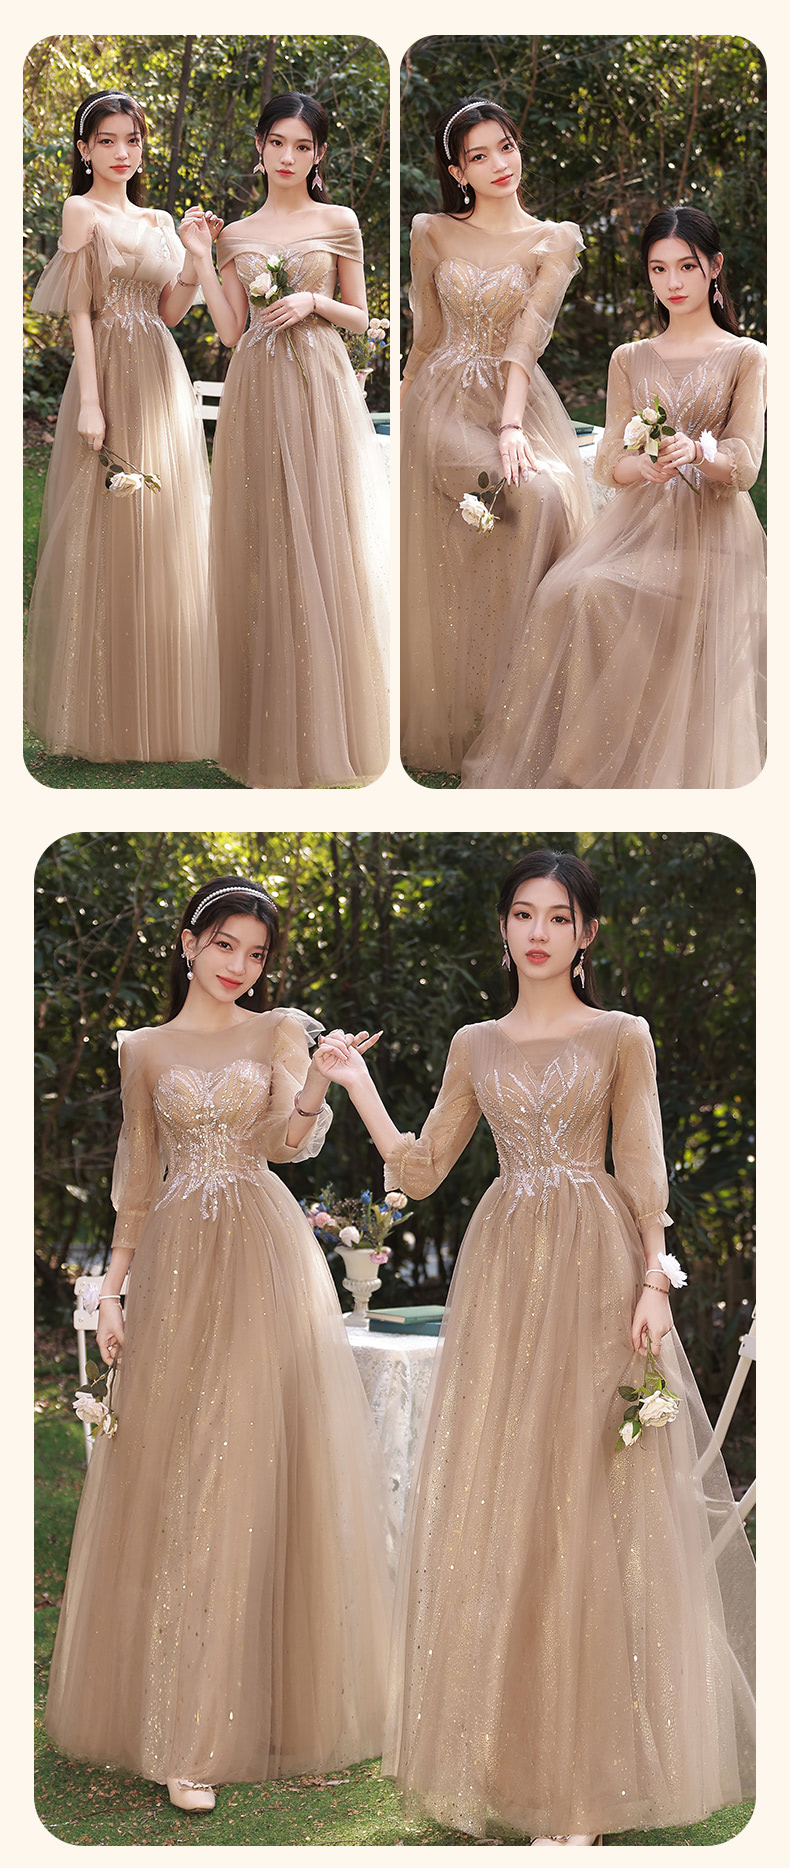 Chiffon-Floor-Length-Bridesmaids-Wedding-Prom-Dress-Ball-Gown14.jpg